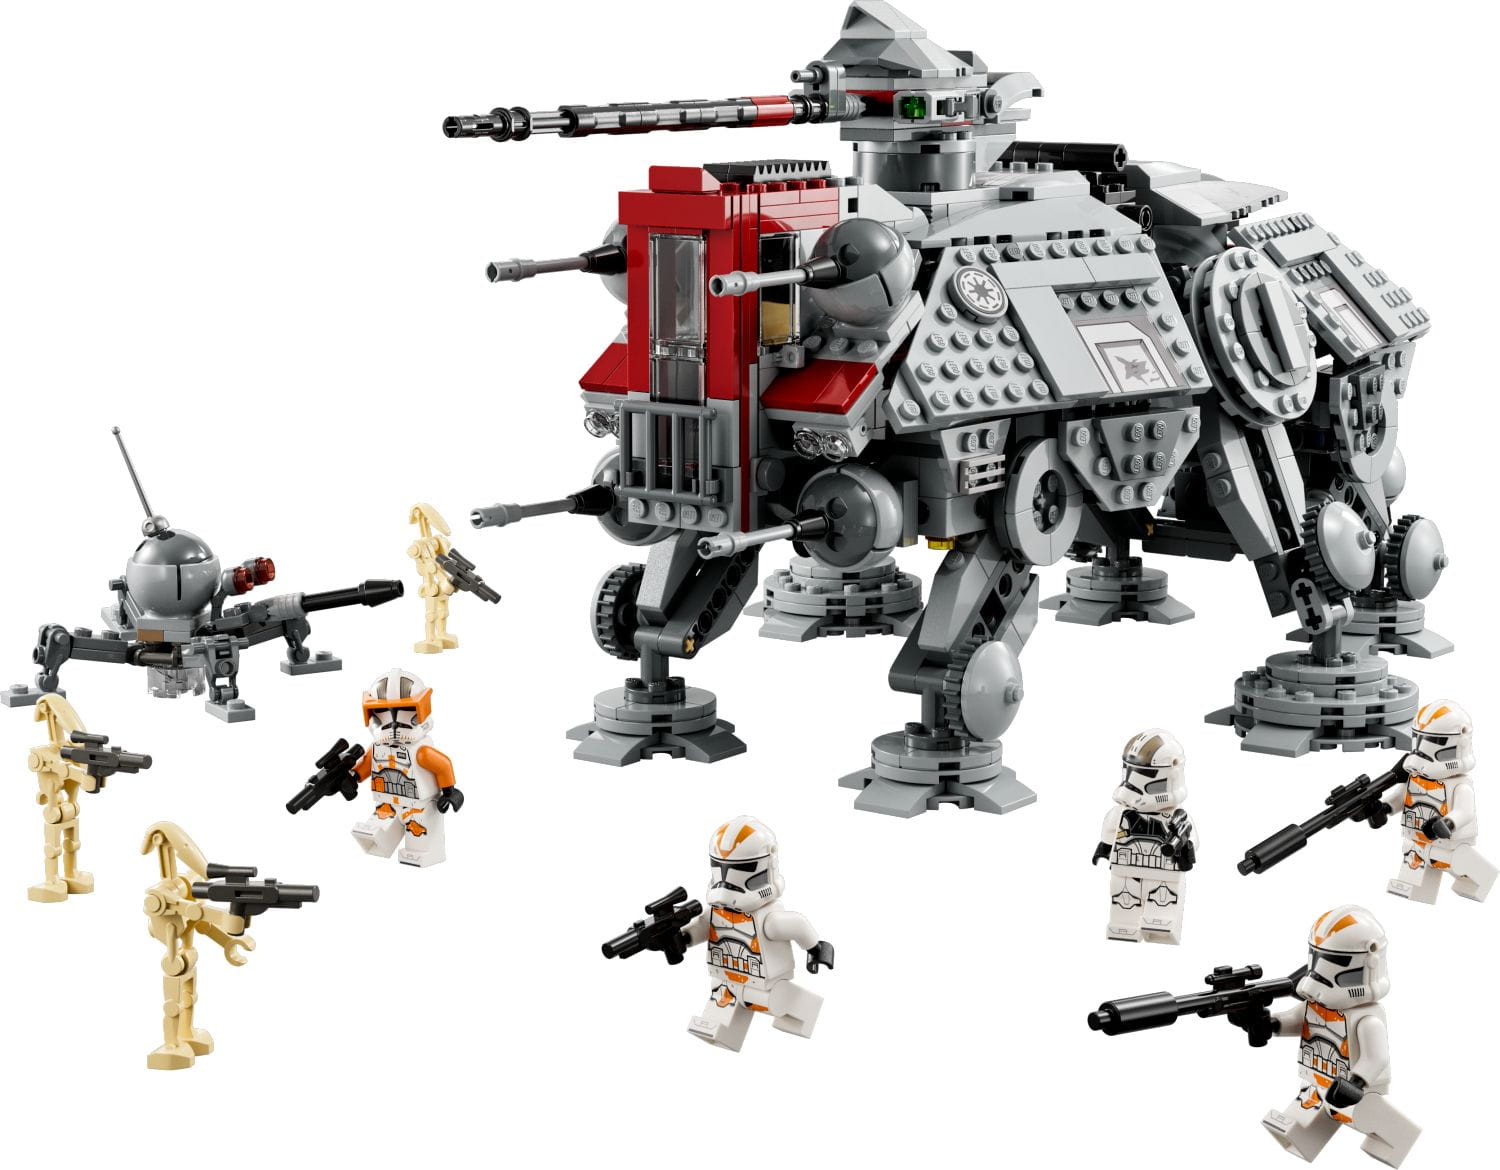 LEGO Star Wars™ AT-TE™ Walker